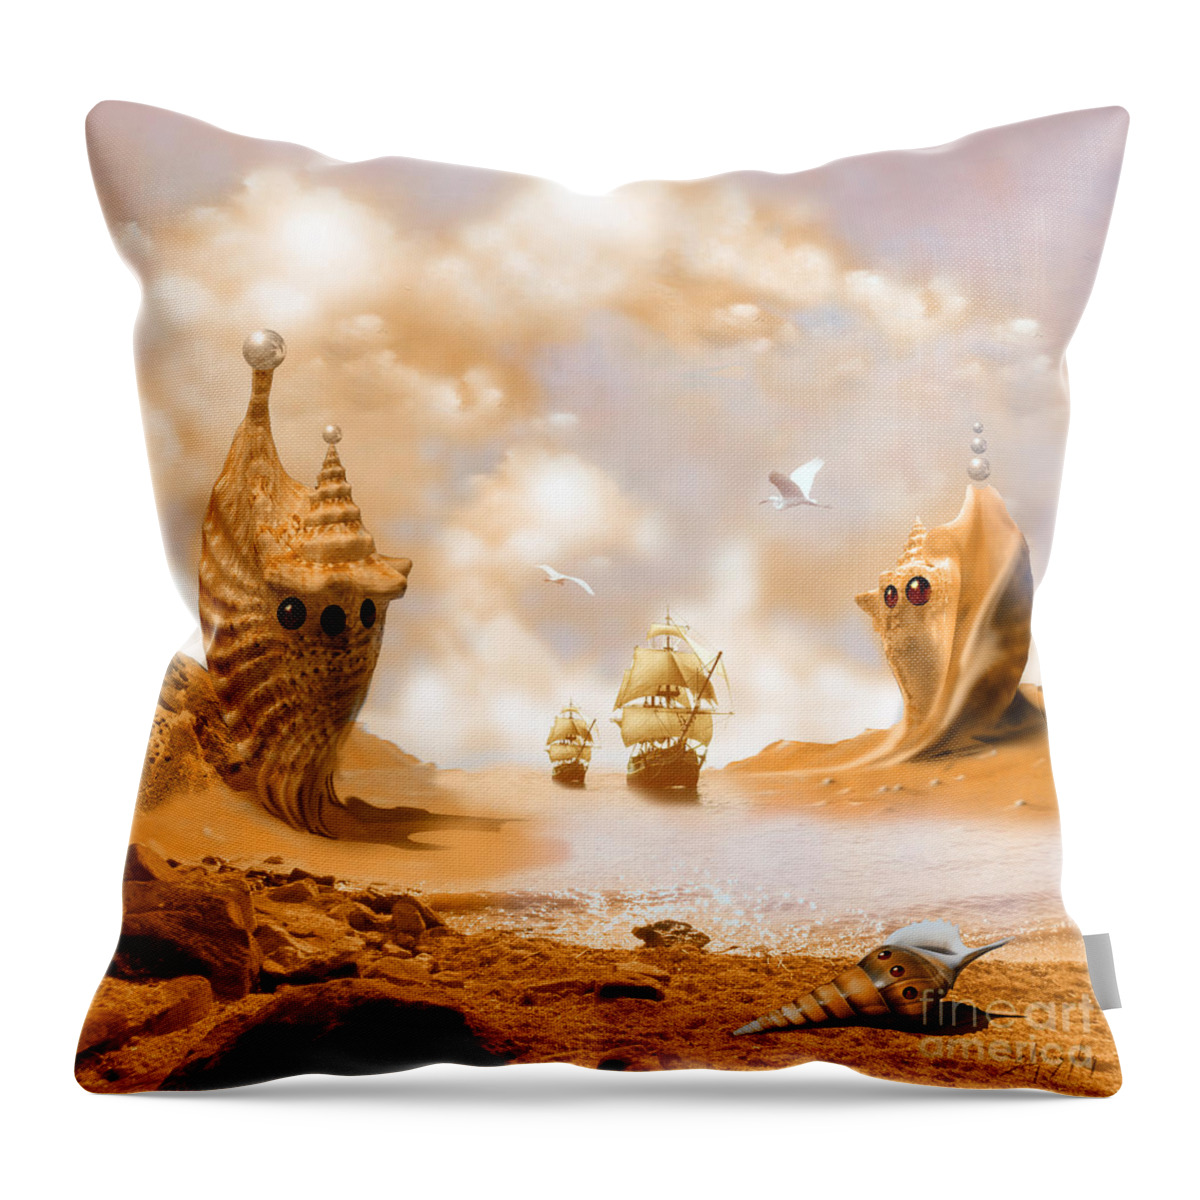 Digital Throw Pillow featuring the digital art Treasure Island by Alexa Szlavics